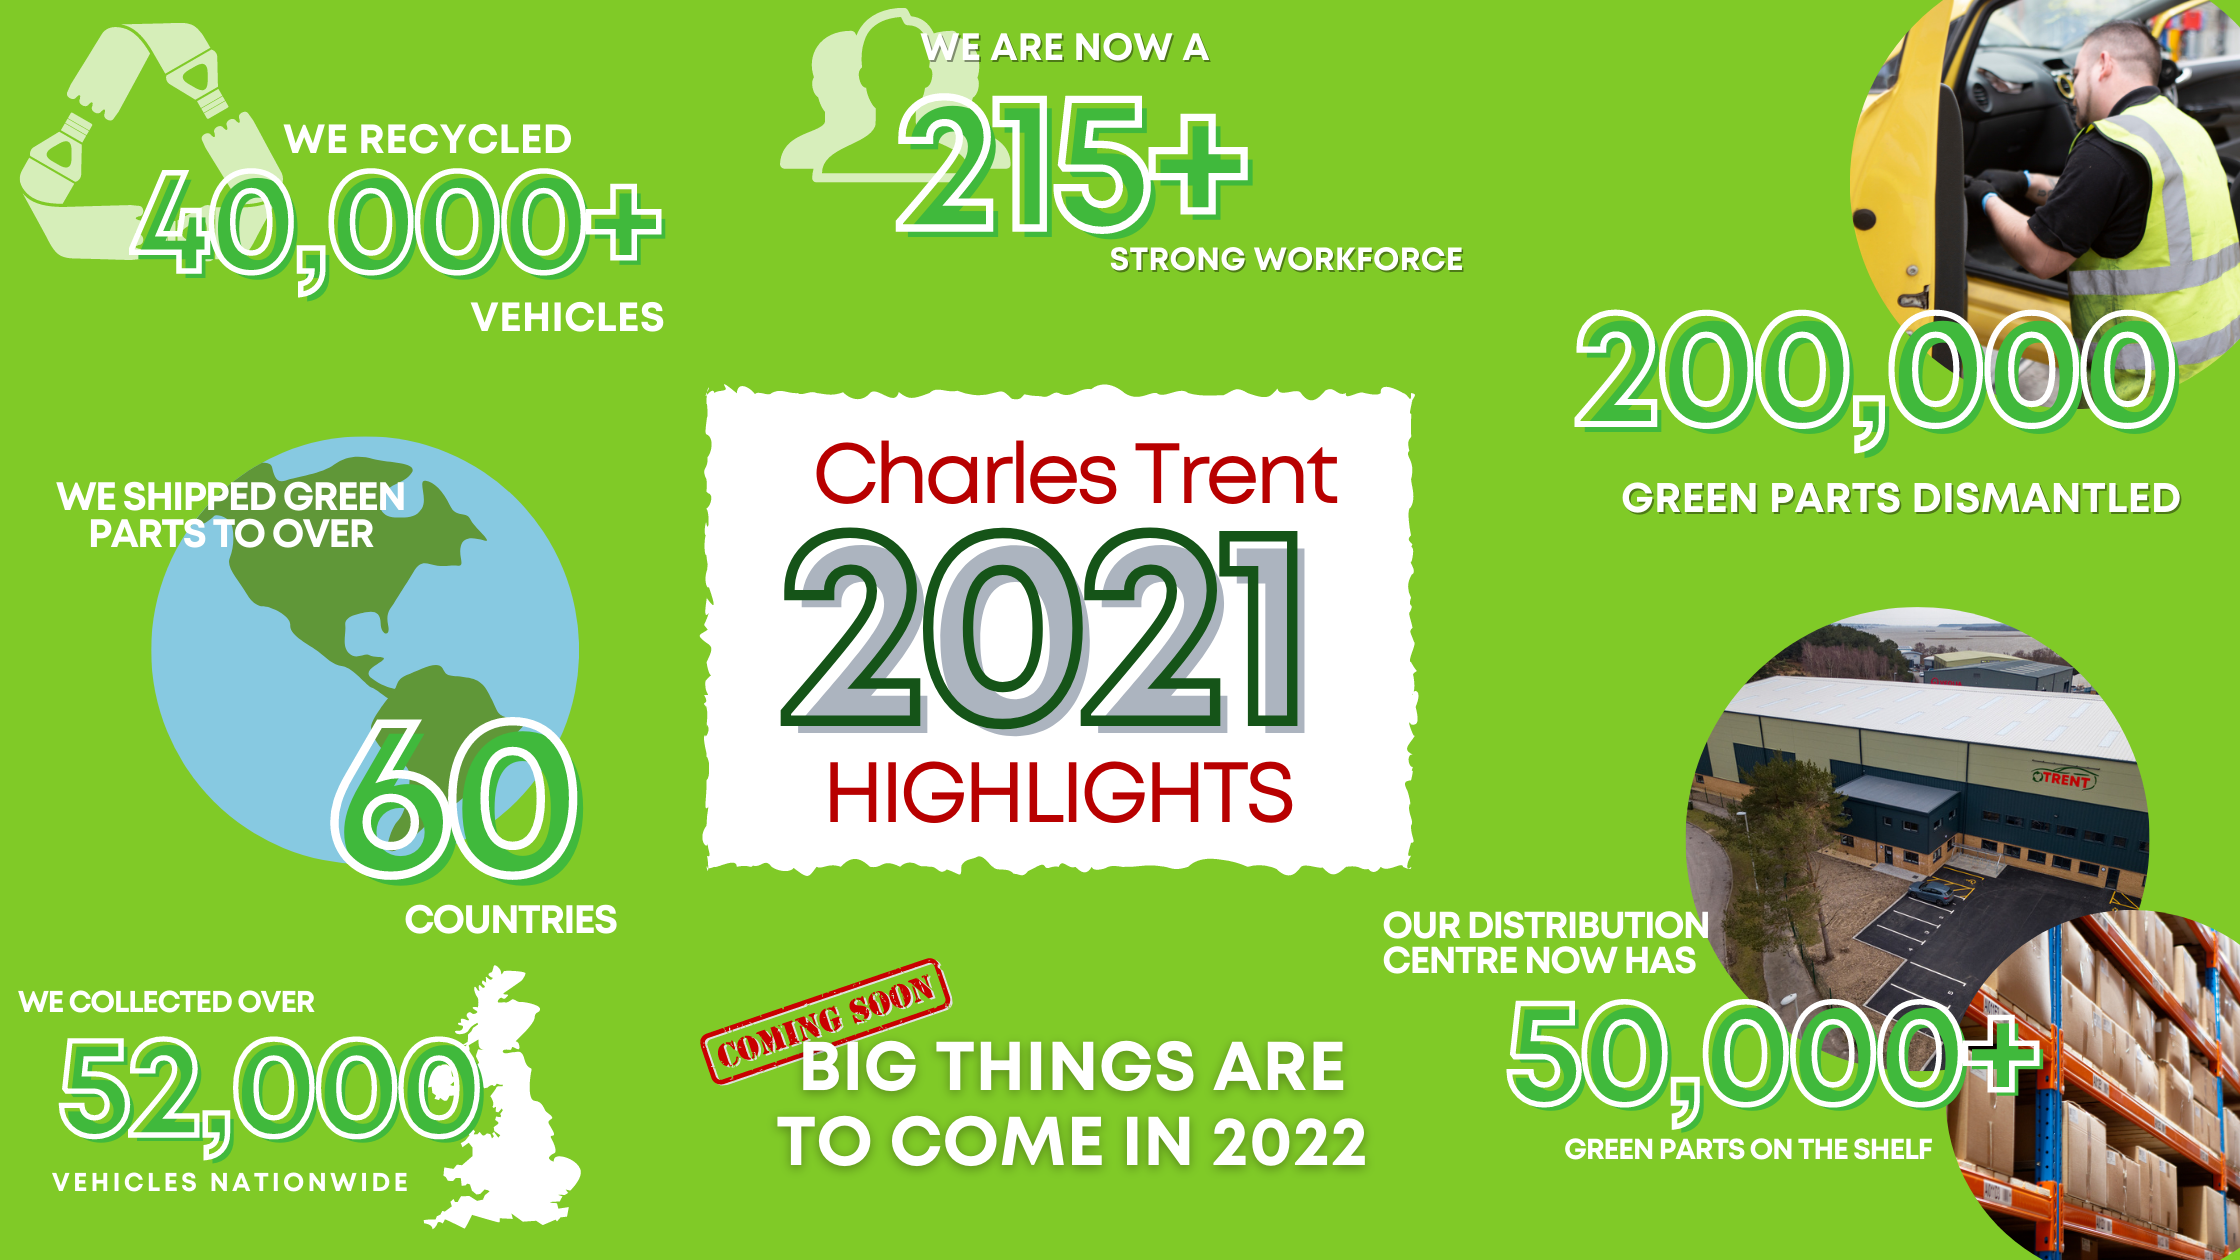 Charles Trent 2021 Highlights